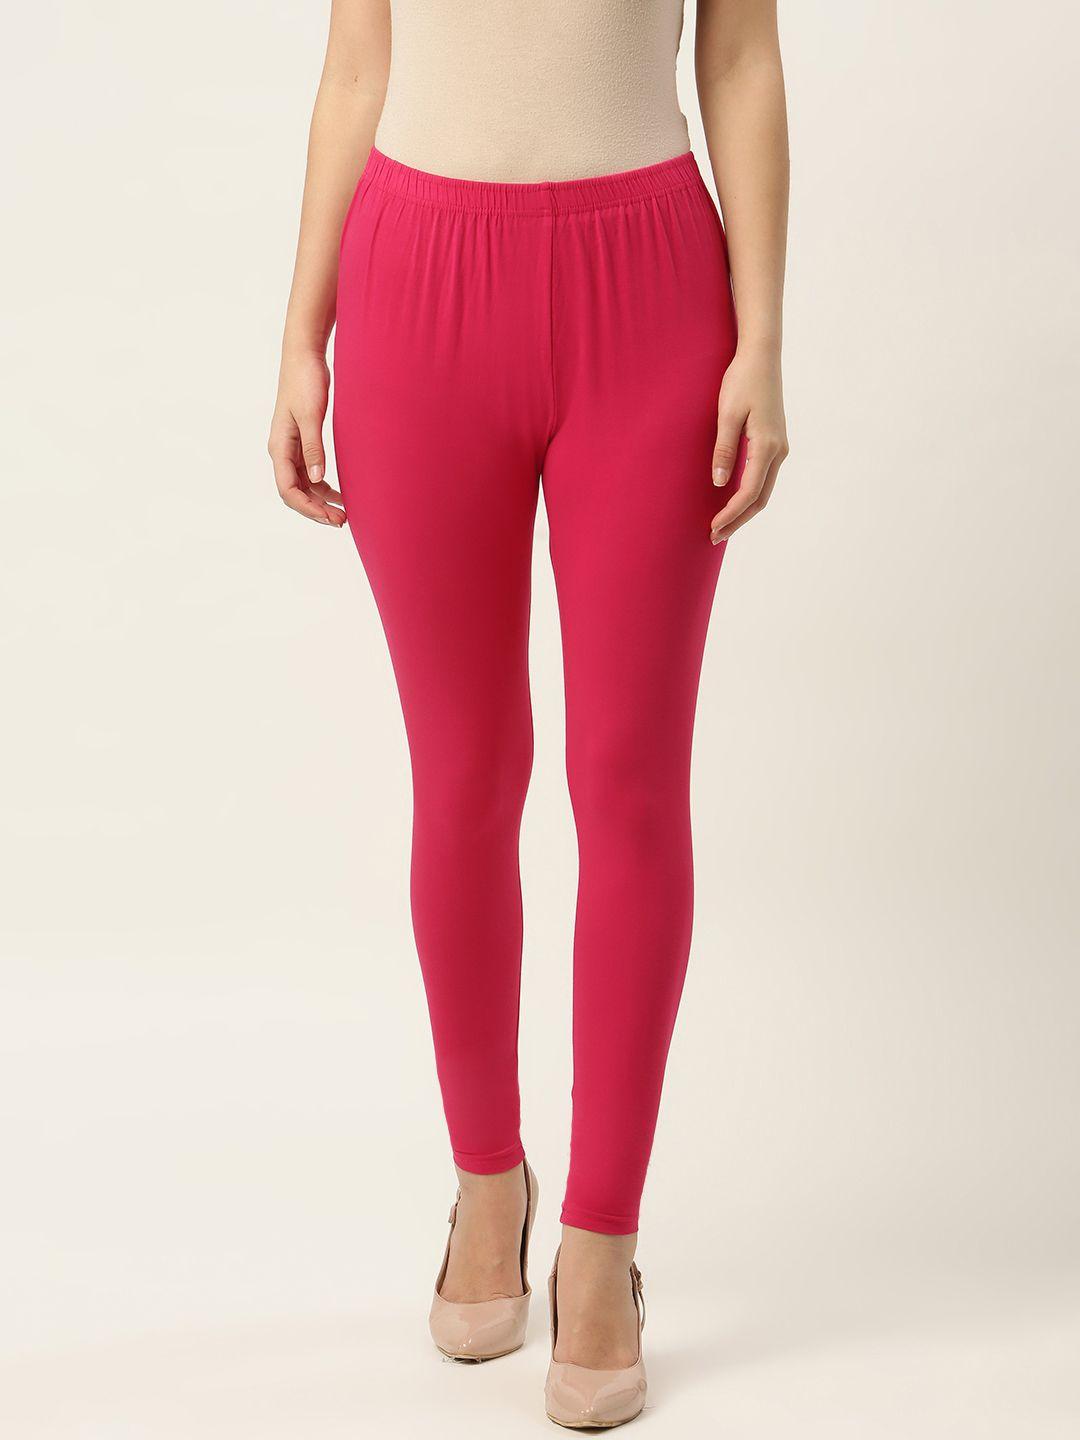 ms.lingies women pink solid ankle-length leggings